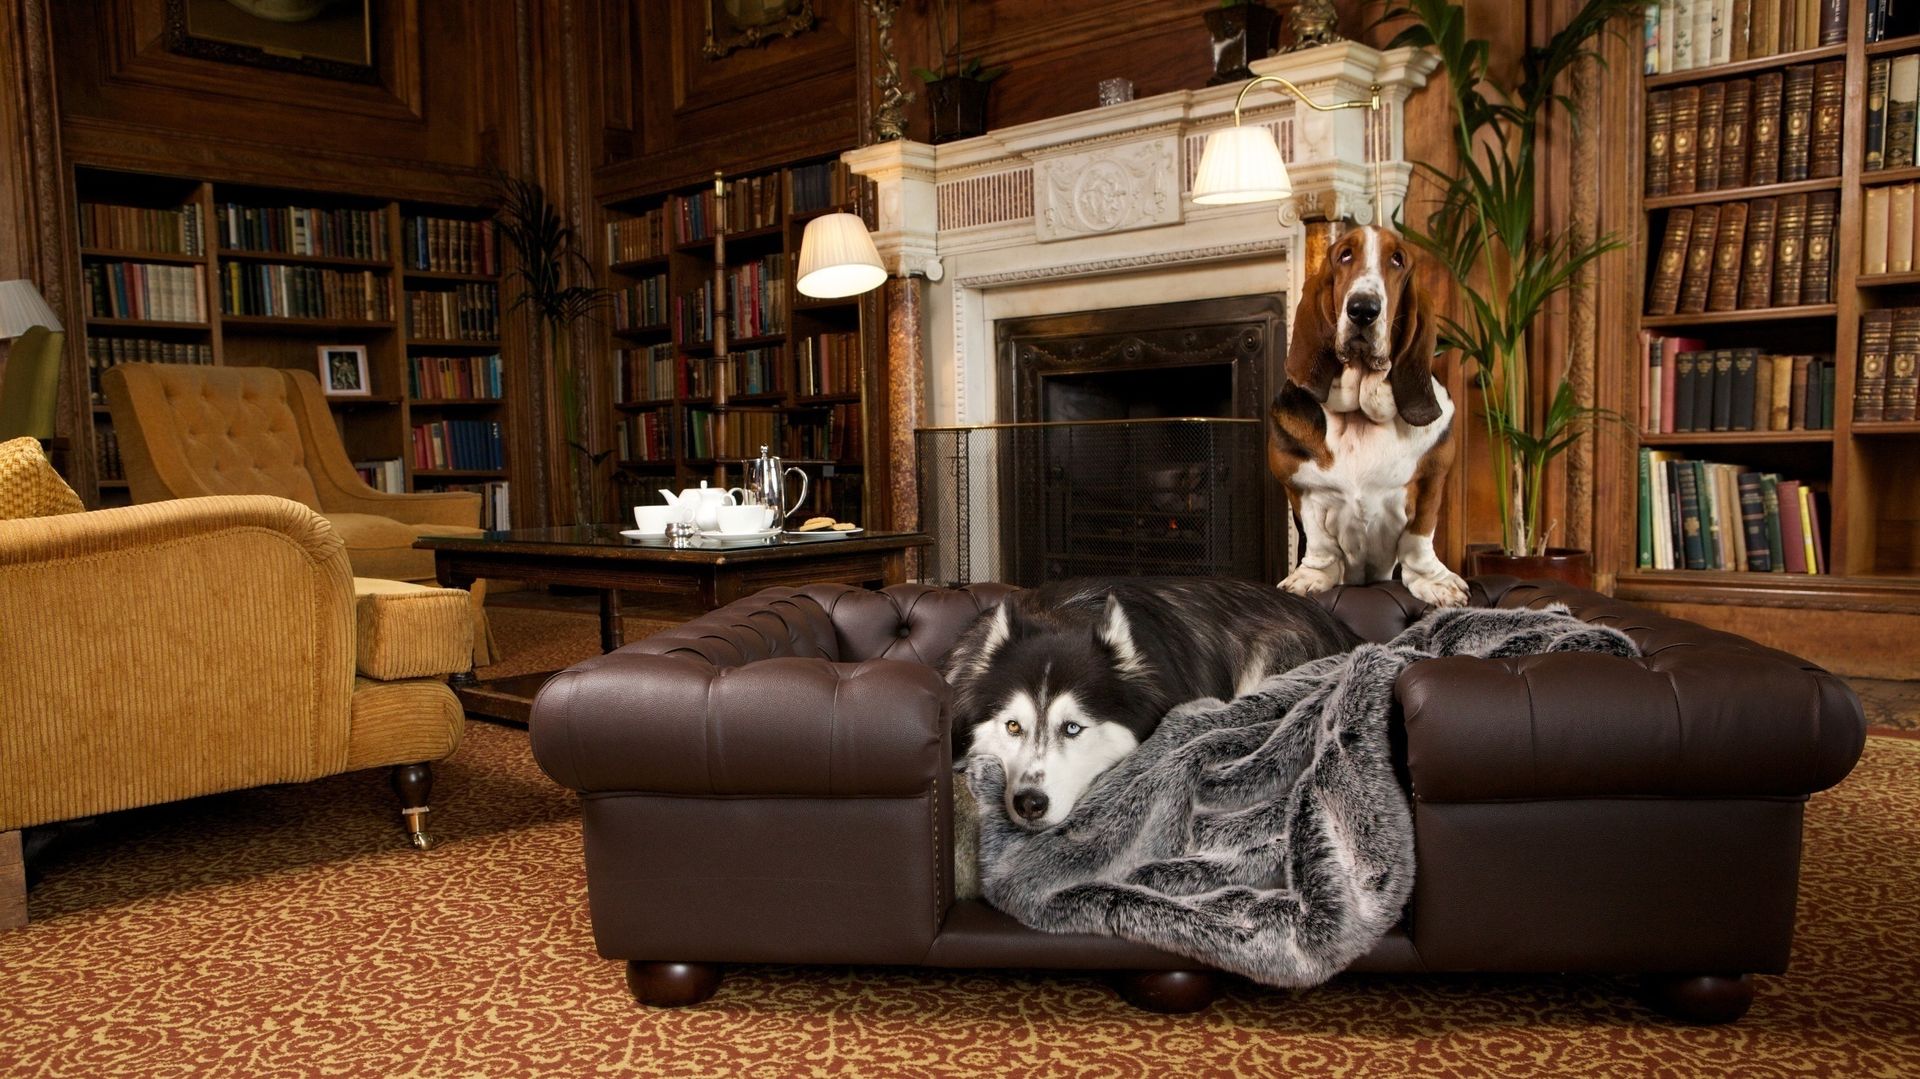 Balmoral large sofa in Chestnut faux leather homify ห้องนั่งเล่น หนังสัตว์เทียม Metallic/Silver โซฟาและเก้าอี้นวม